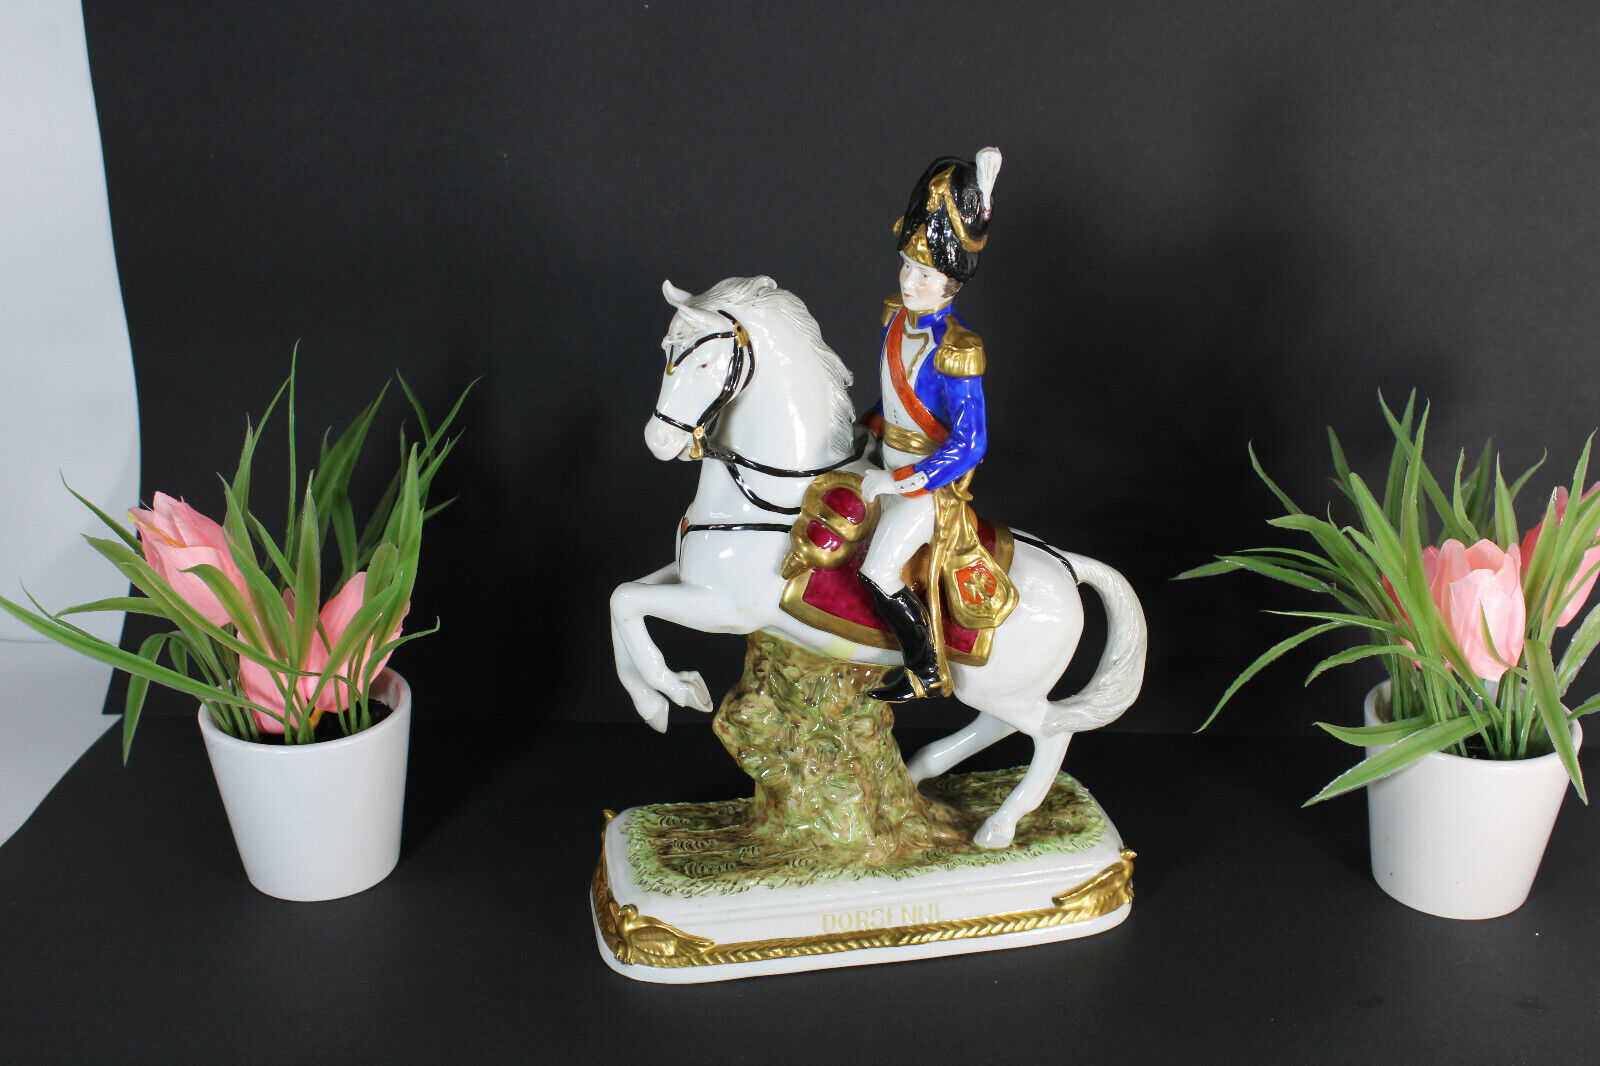 German scheibe alsbach porcelain napoleon officer dorsenne on horse marked 